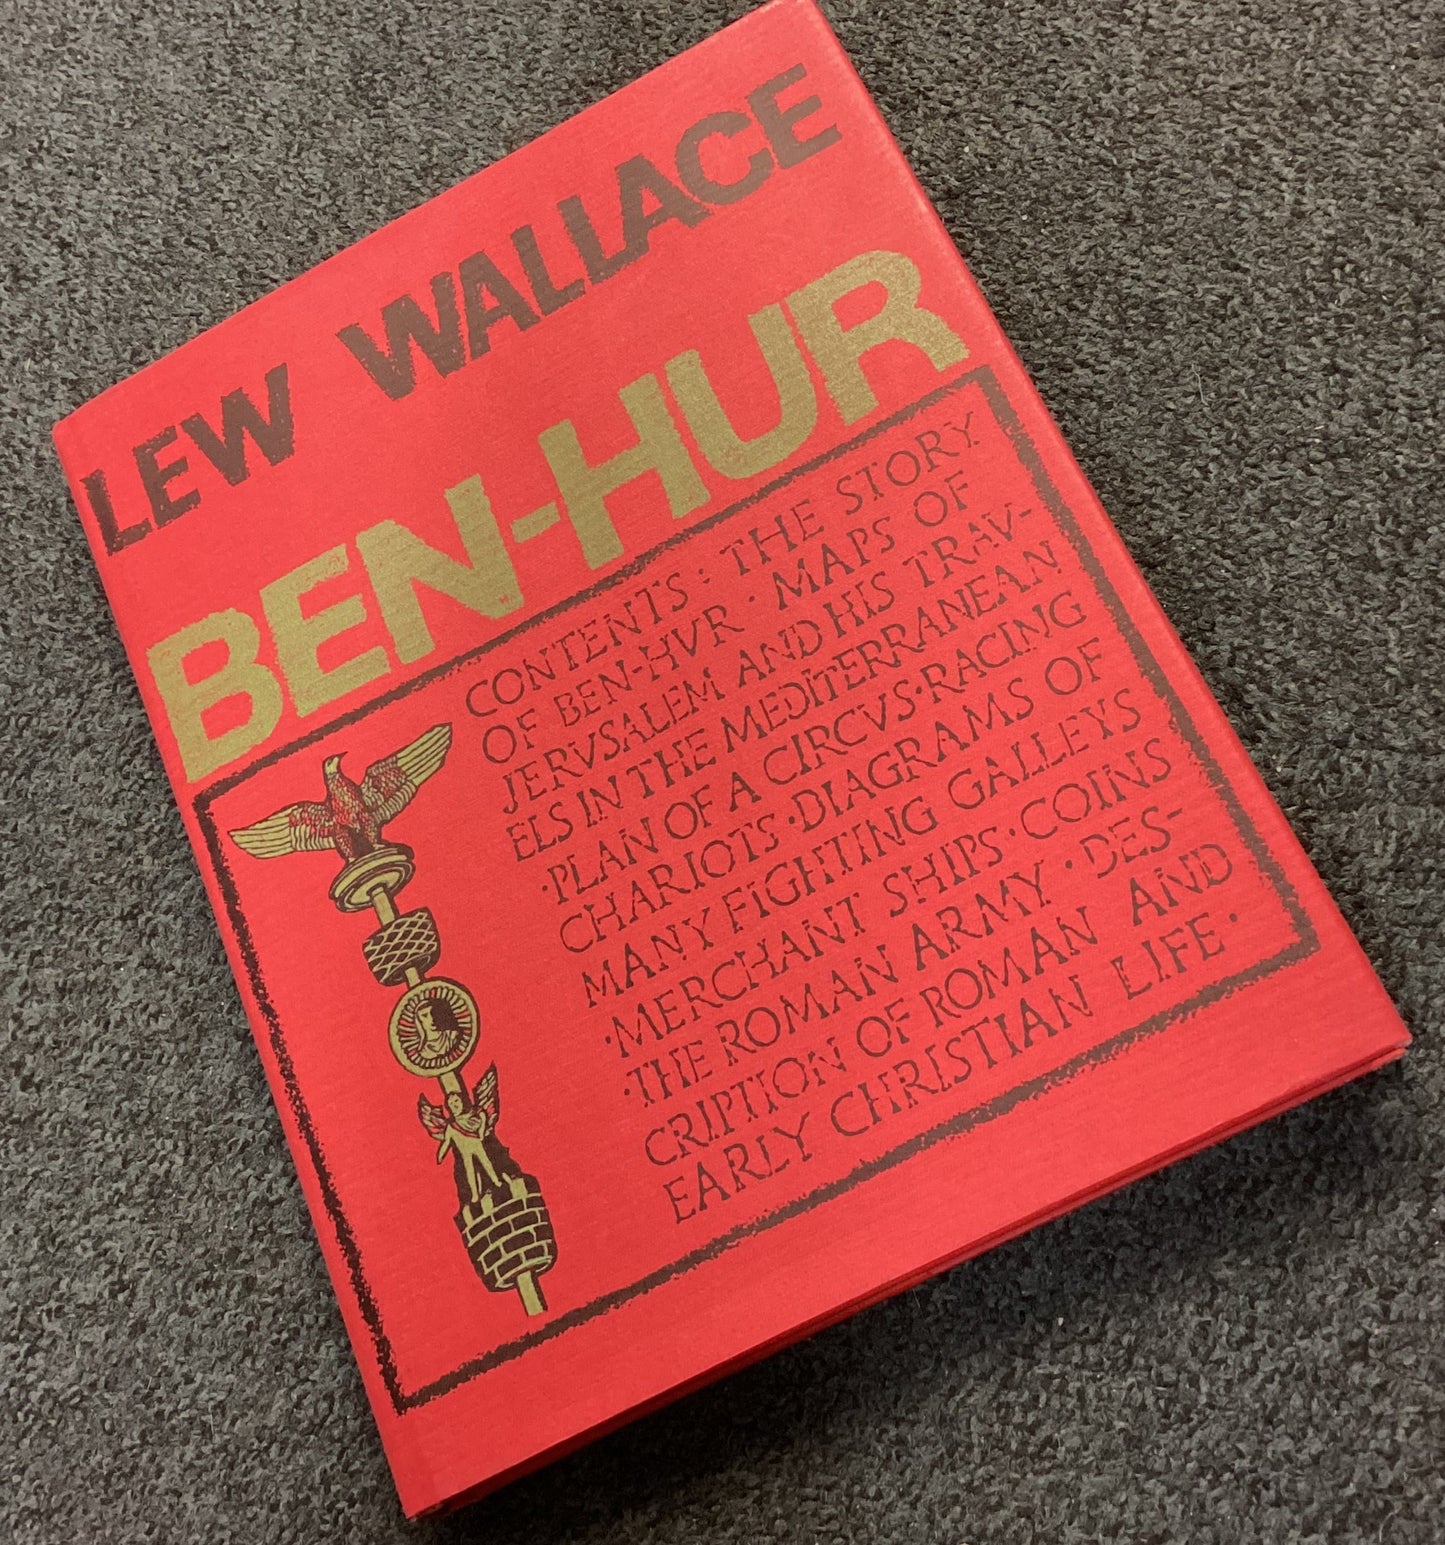 Ben-Hur by Lew Wallace (1972)